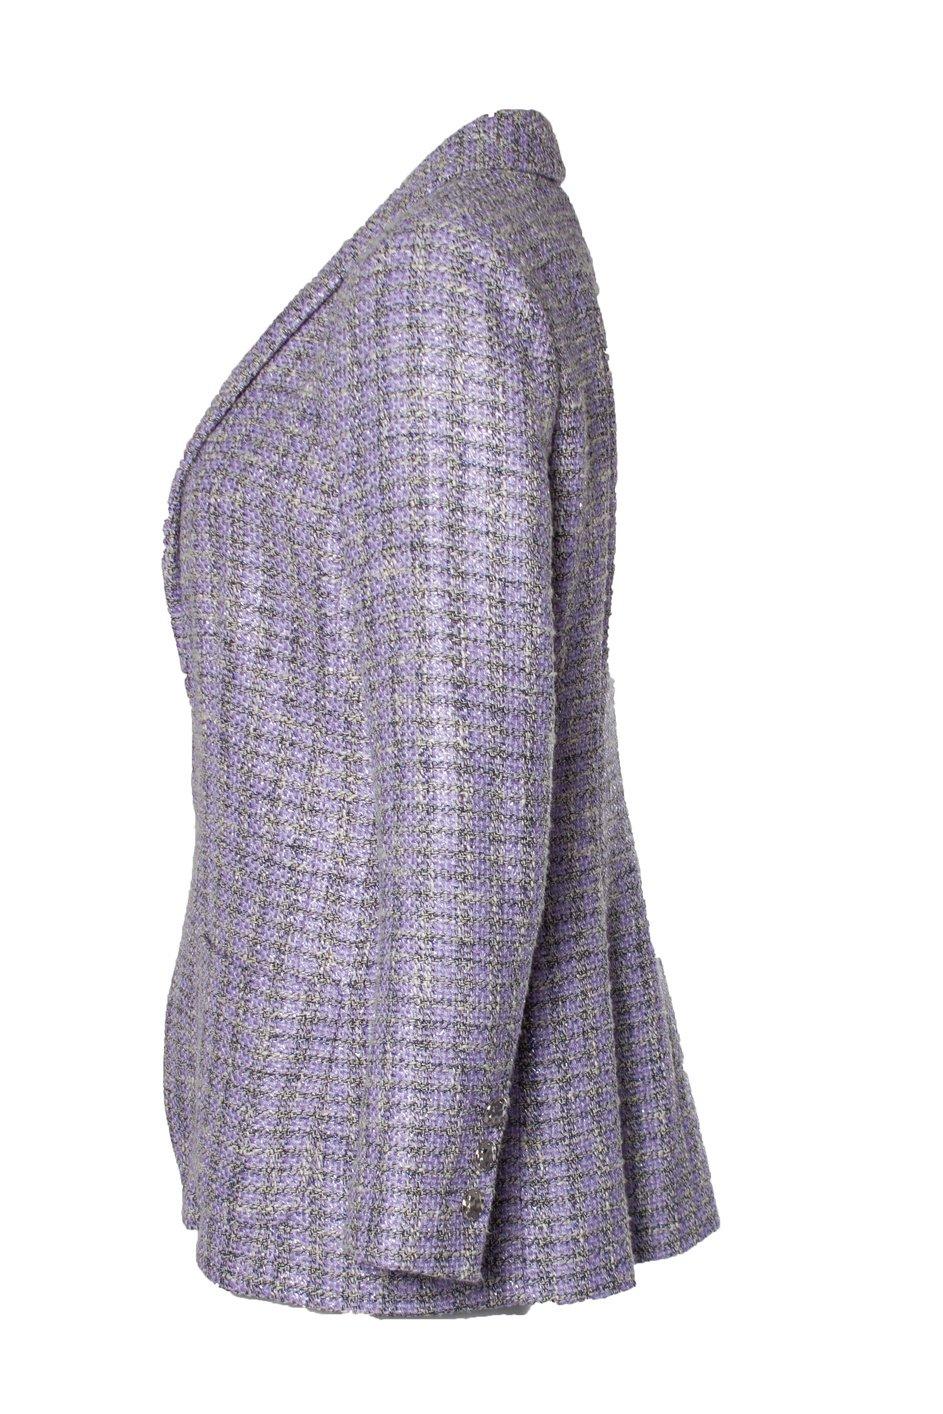 Chanel Airport Runway Lavender Tweed Jacket For Sale 3